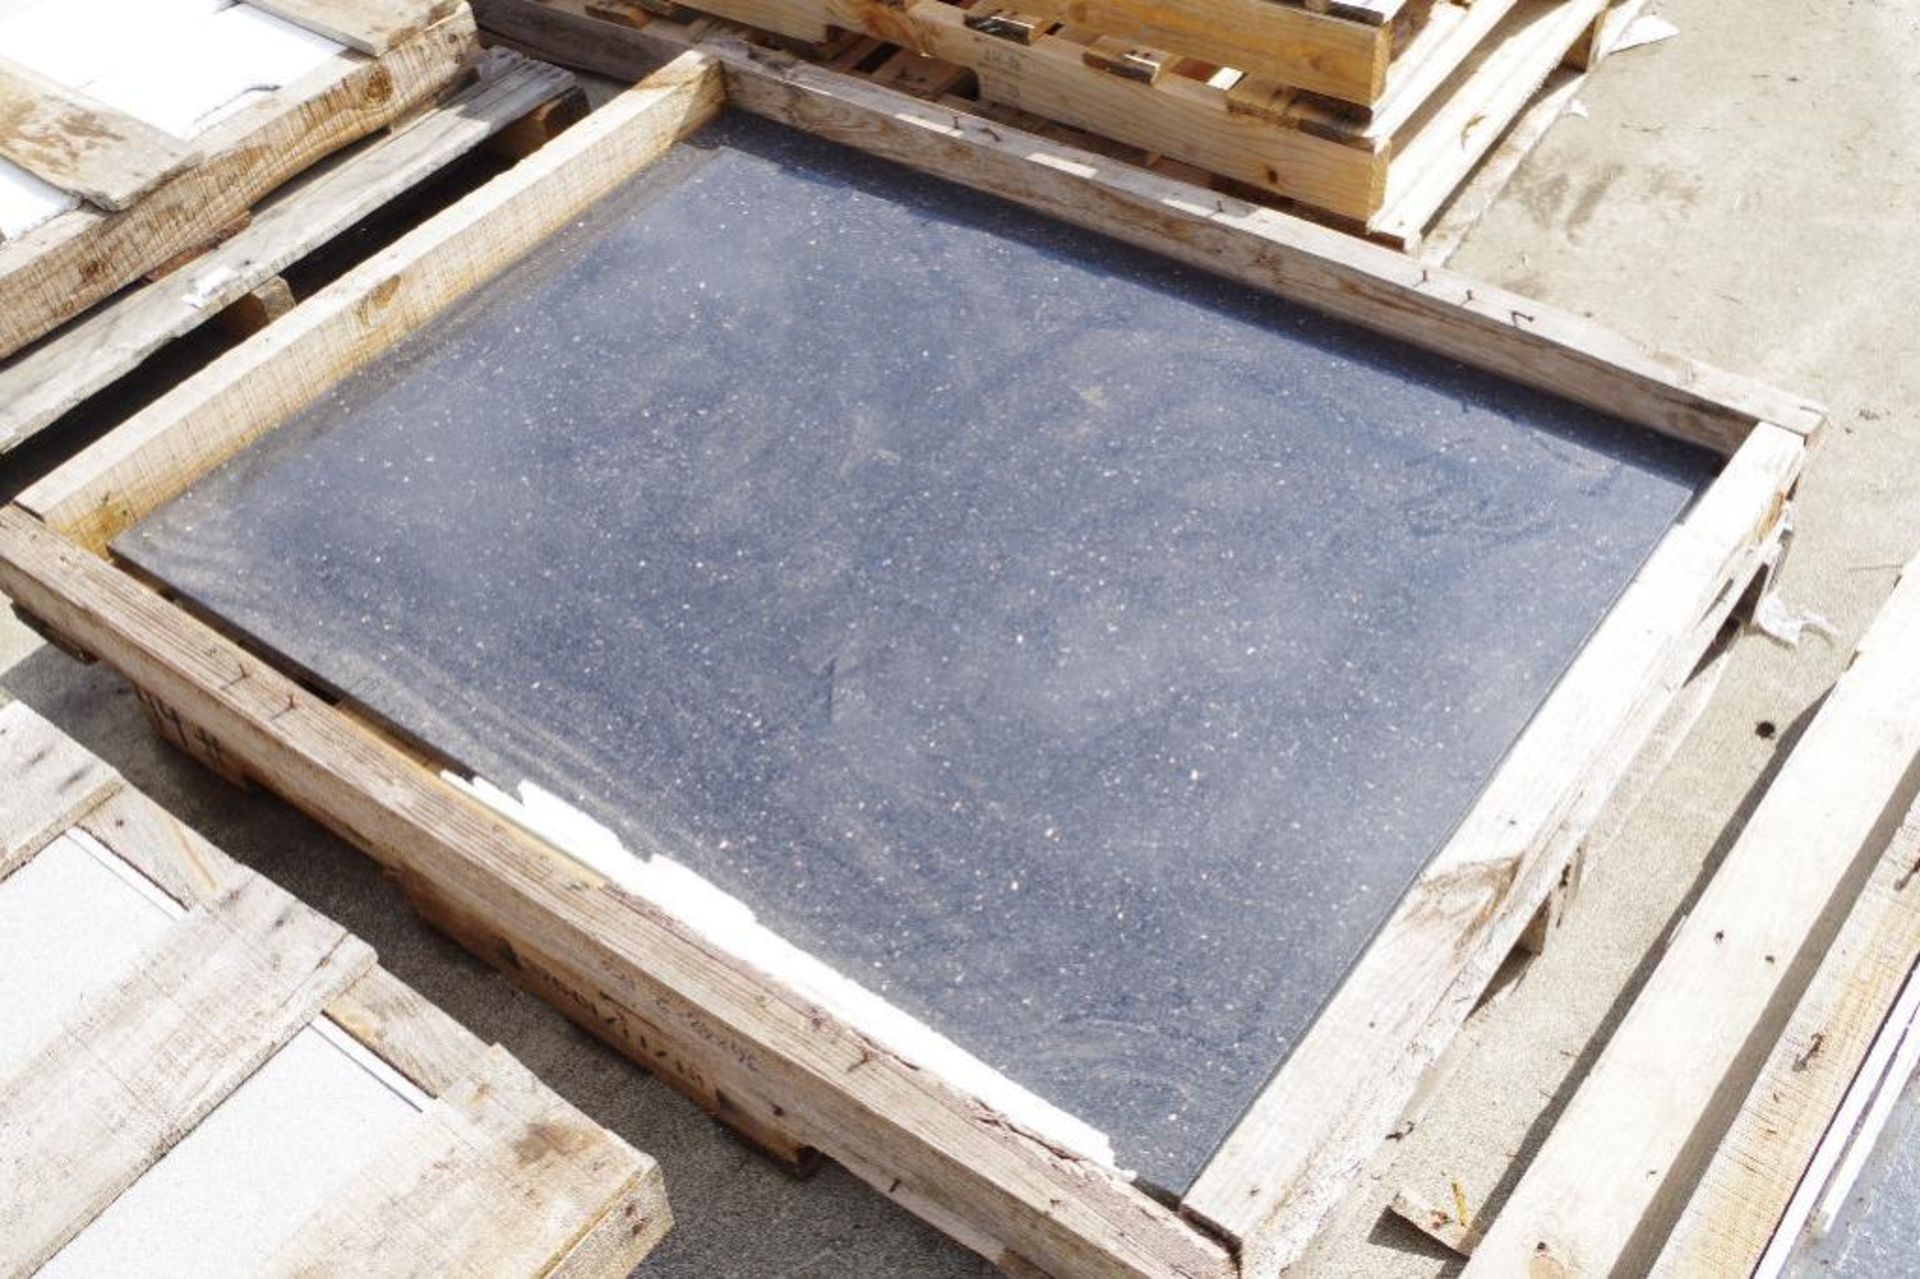 [2] NEW Granite Table Tops 48" x 36" (1 crate of 2)